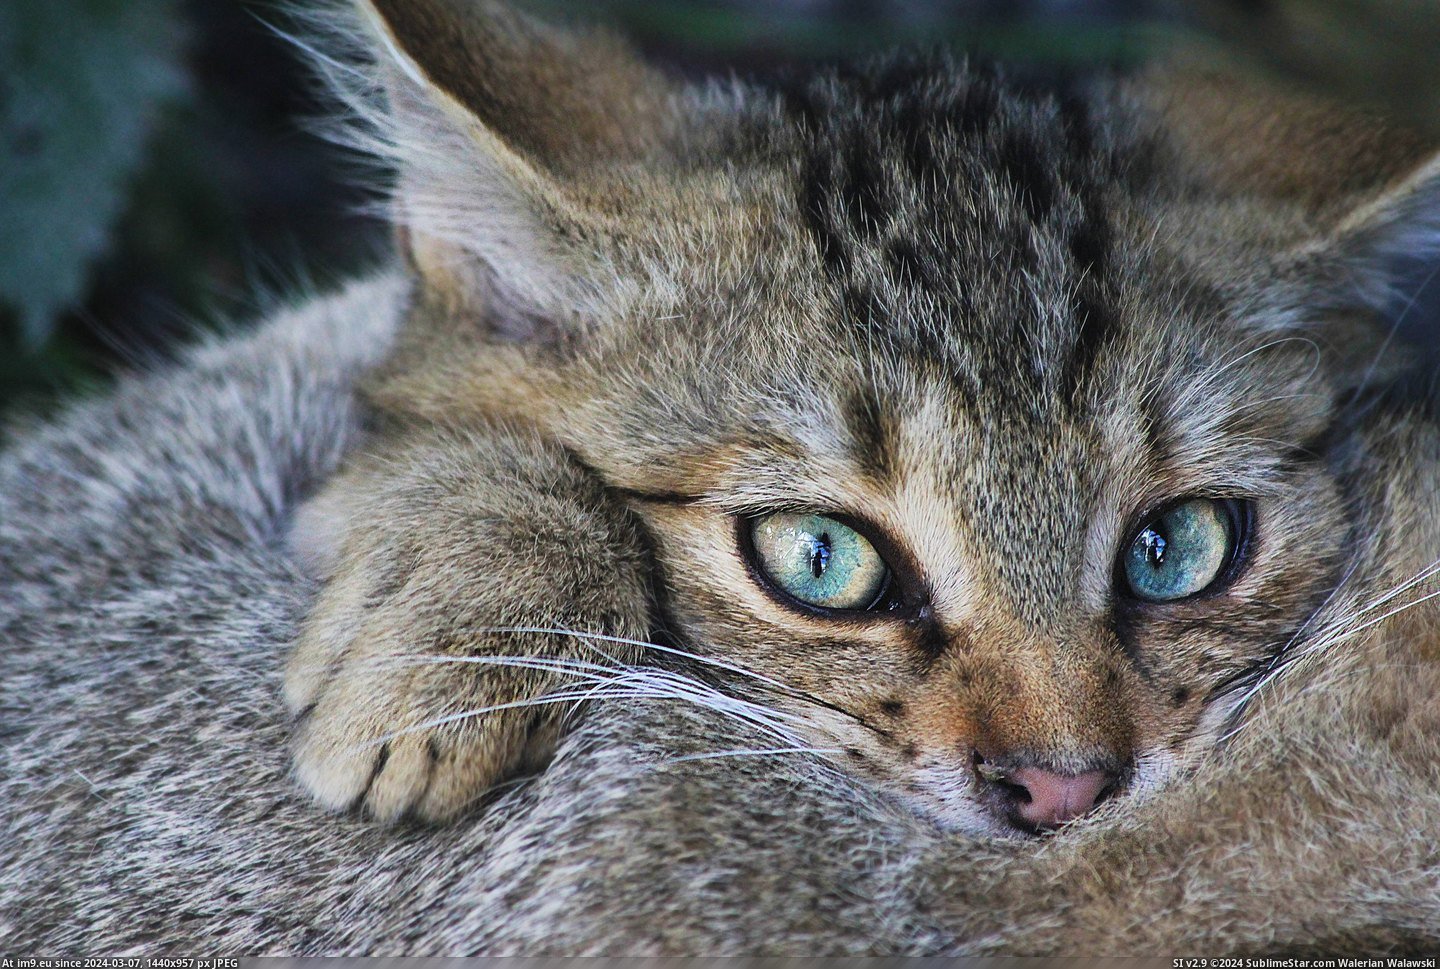 #Cats #Wildcat #Belongs [Cats] Well this is a wildcat, belongs here too?  pics Pic. (Изображение из альбом My r/CATS favs))